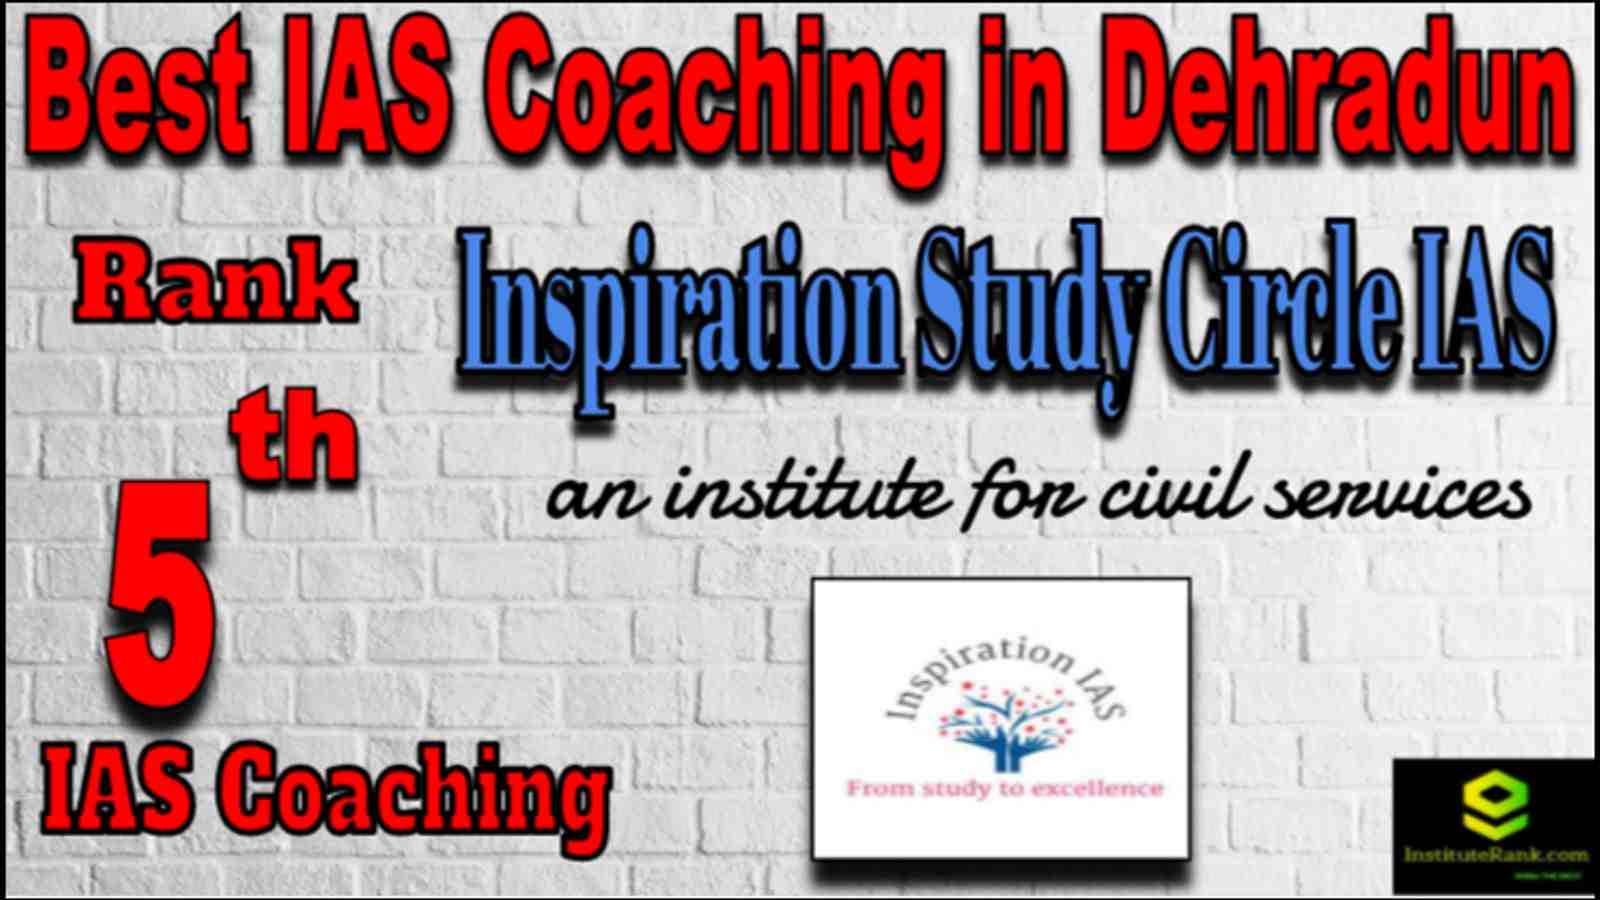 Rank 5 Best IAS Coaching in Dehradun